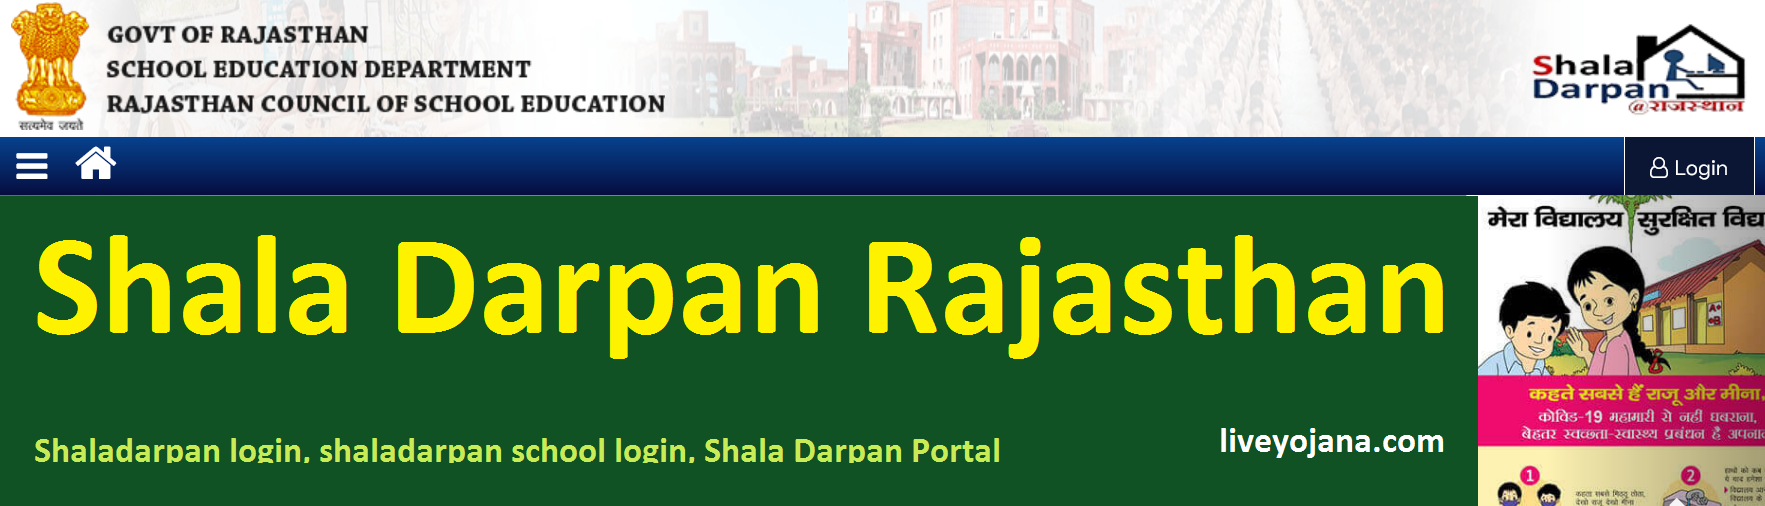 shaladarpan school login, Shala Darpan